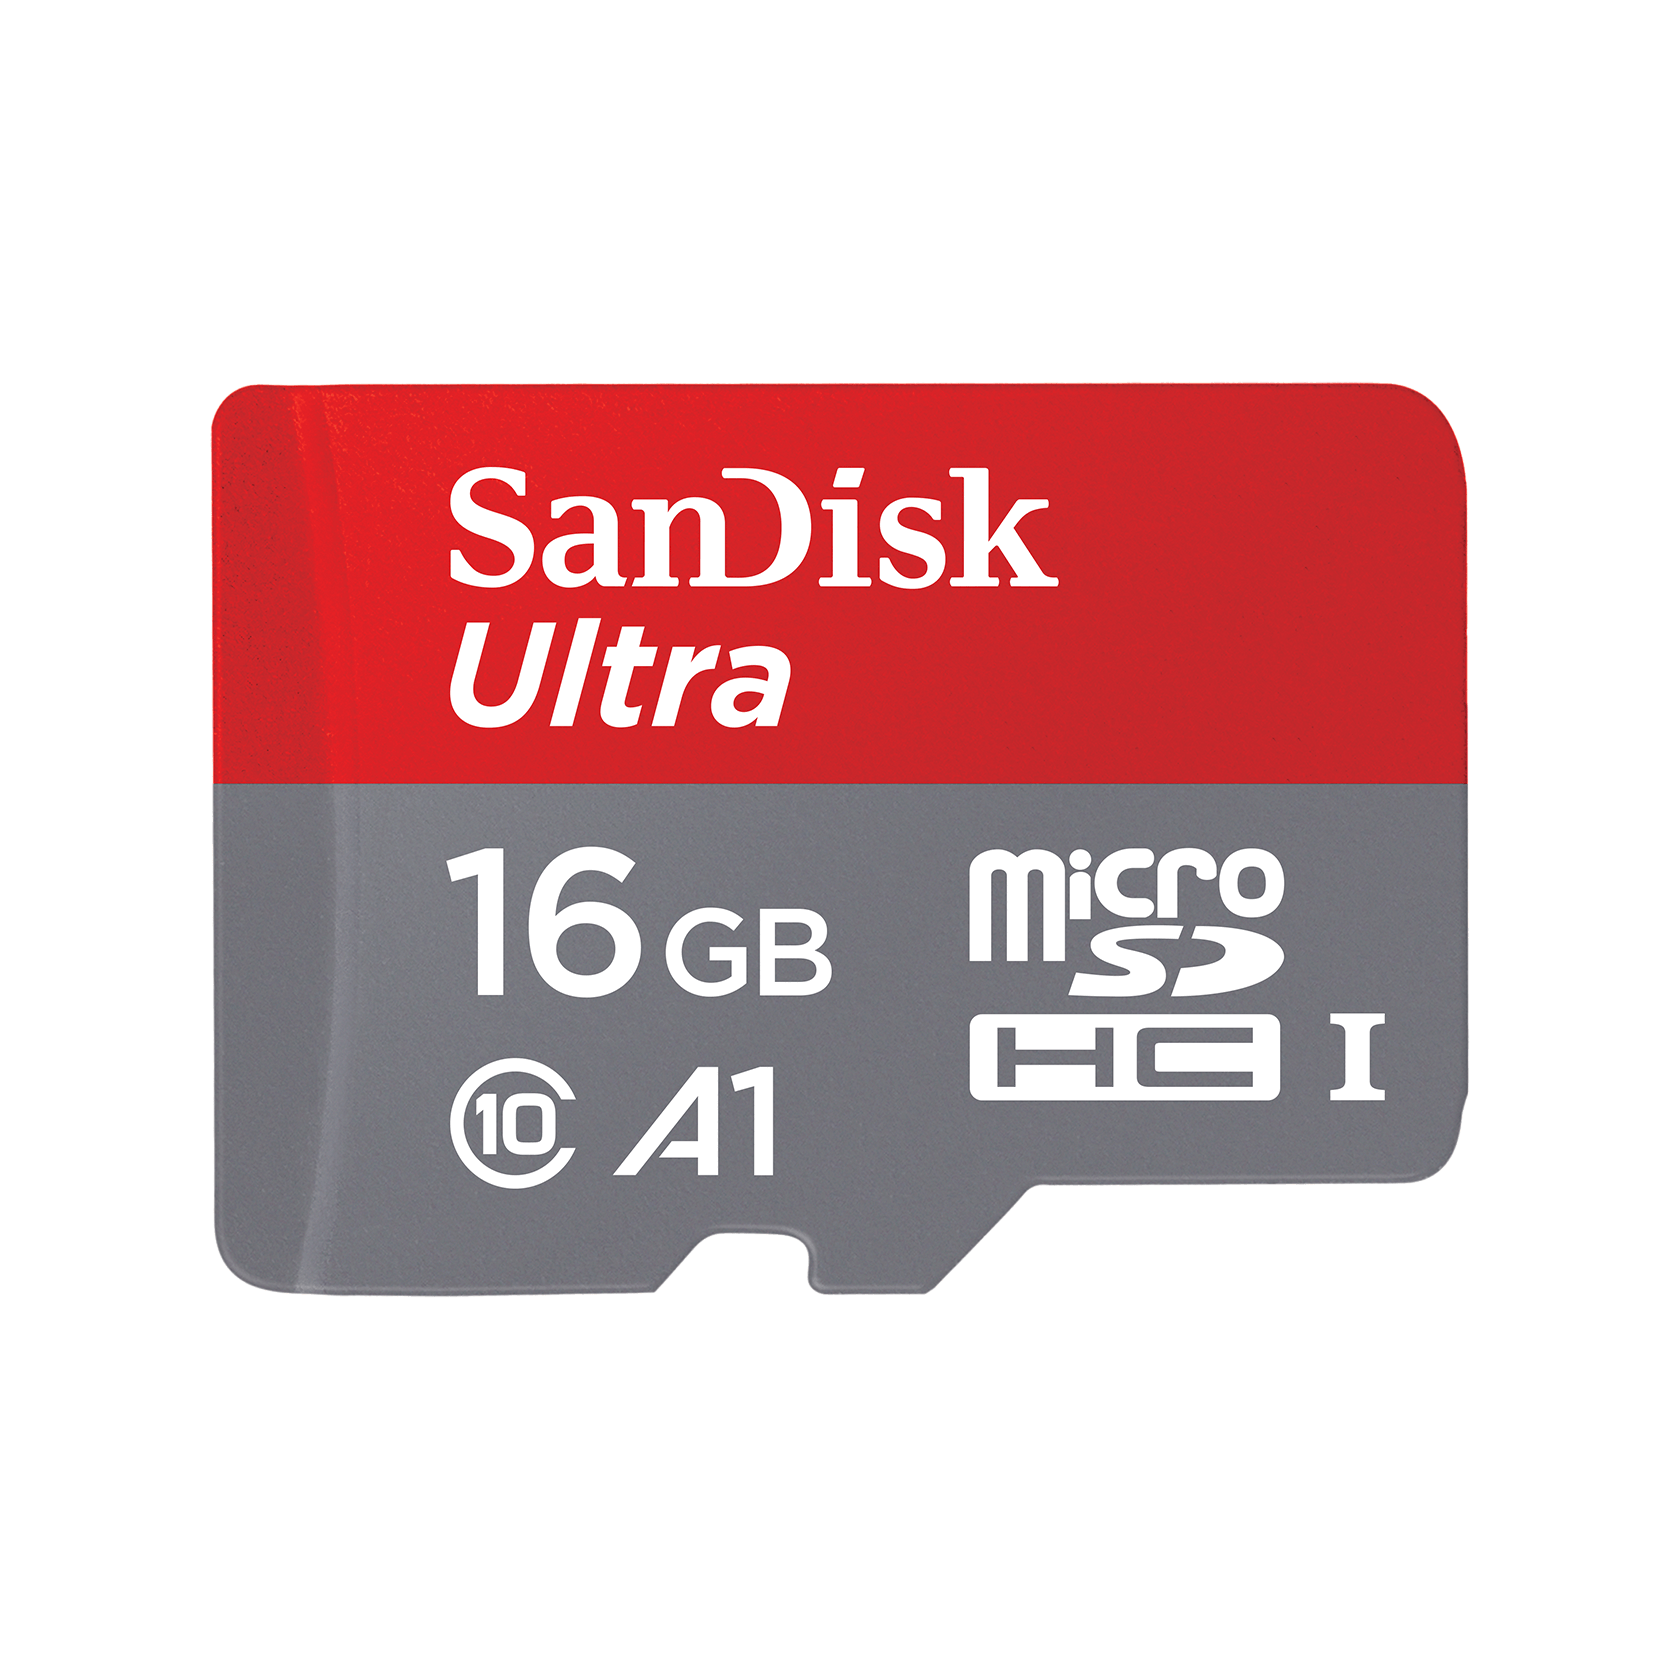 1TB SanDisk Ultra® microSDXC Western Digital Store $159.99